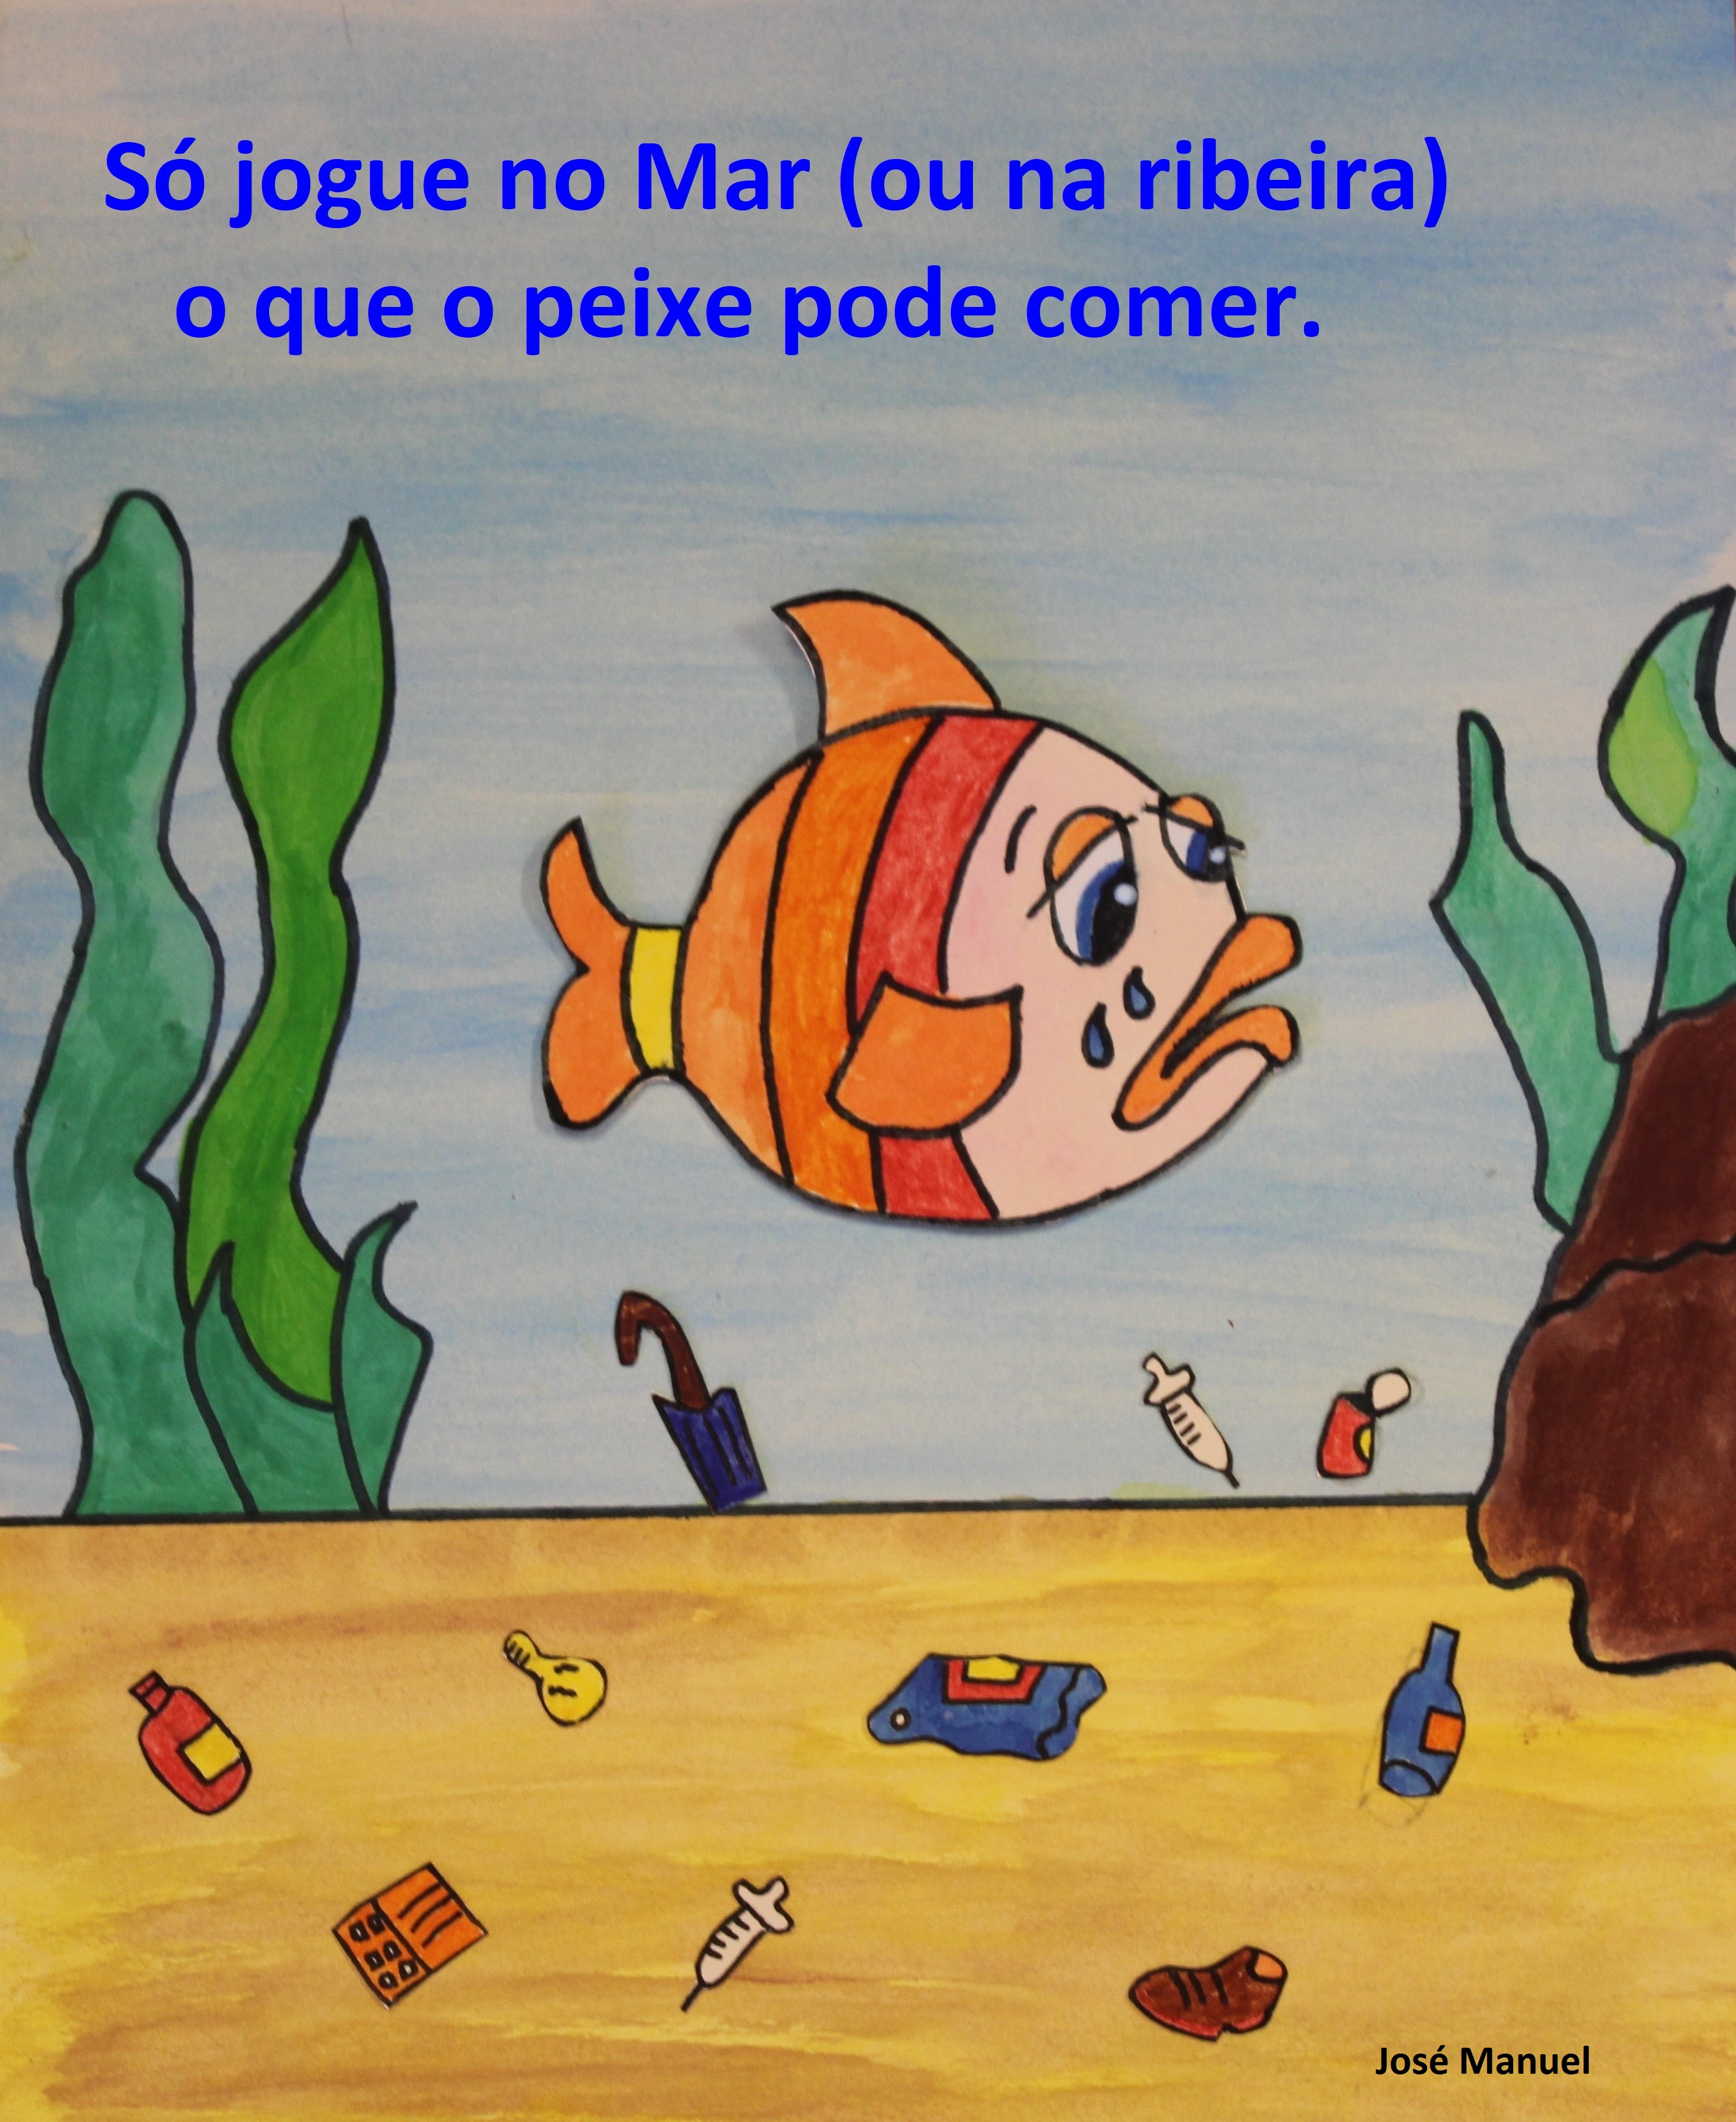 Jose Manuel<br/><br/>So jogue no Mar( ou na ribeira) o que o peixe pode comer.